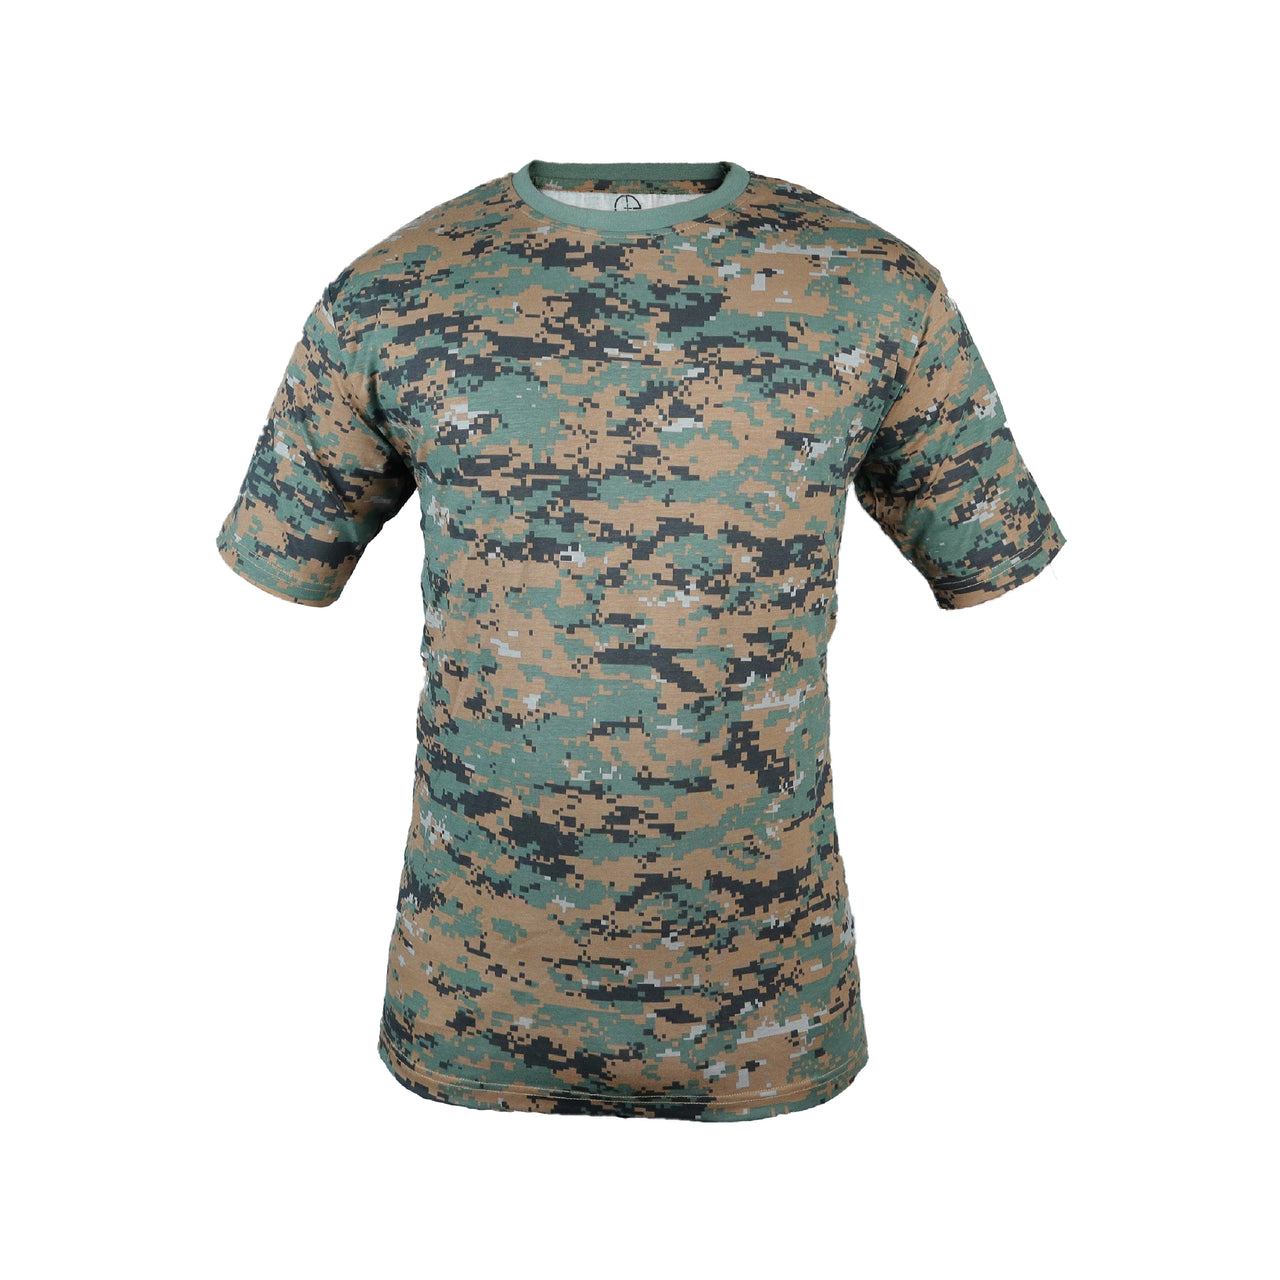 Woodland Digital Camouflage, T-shirt